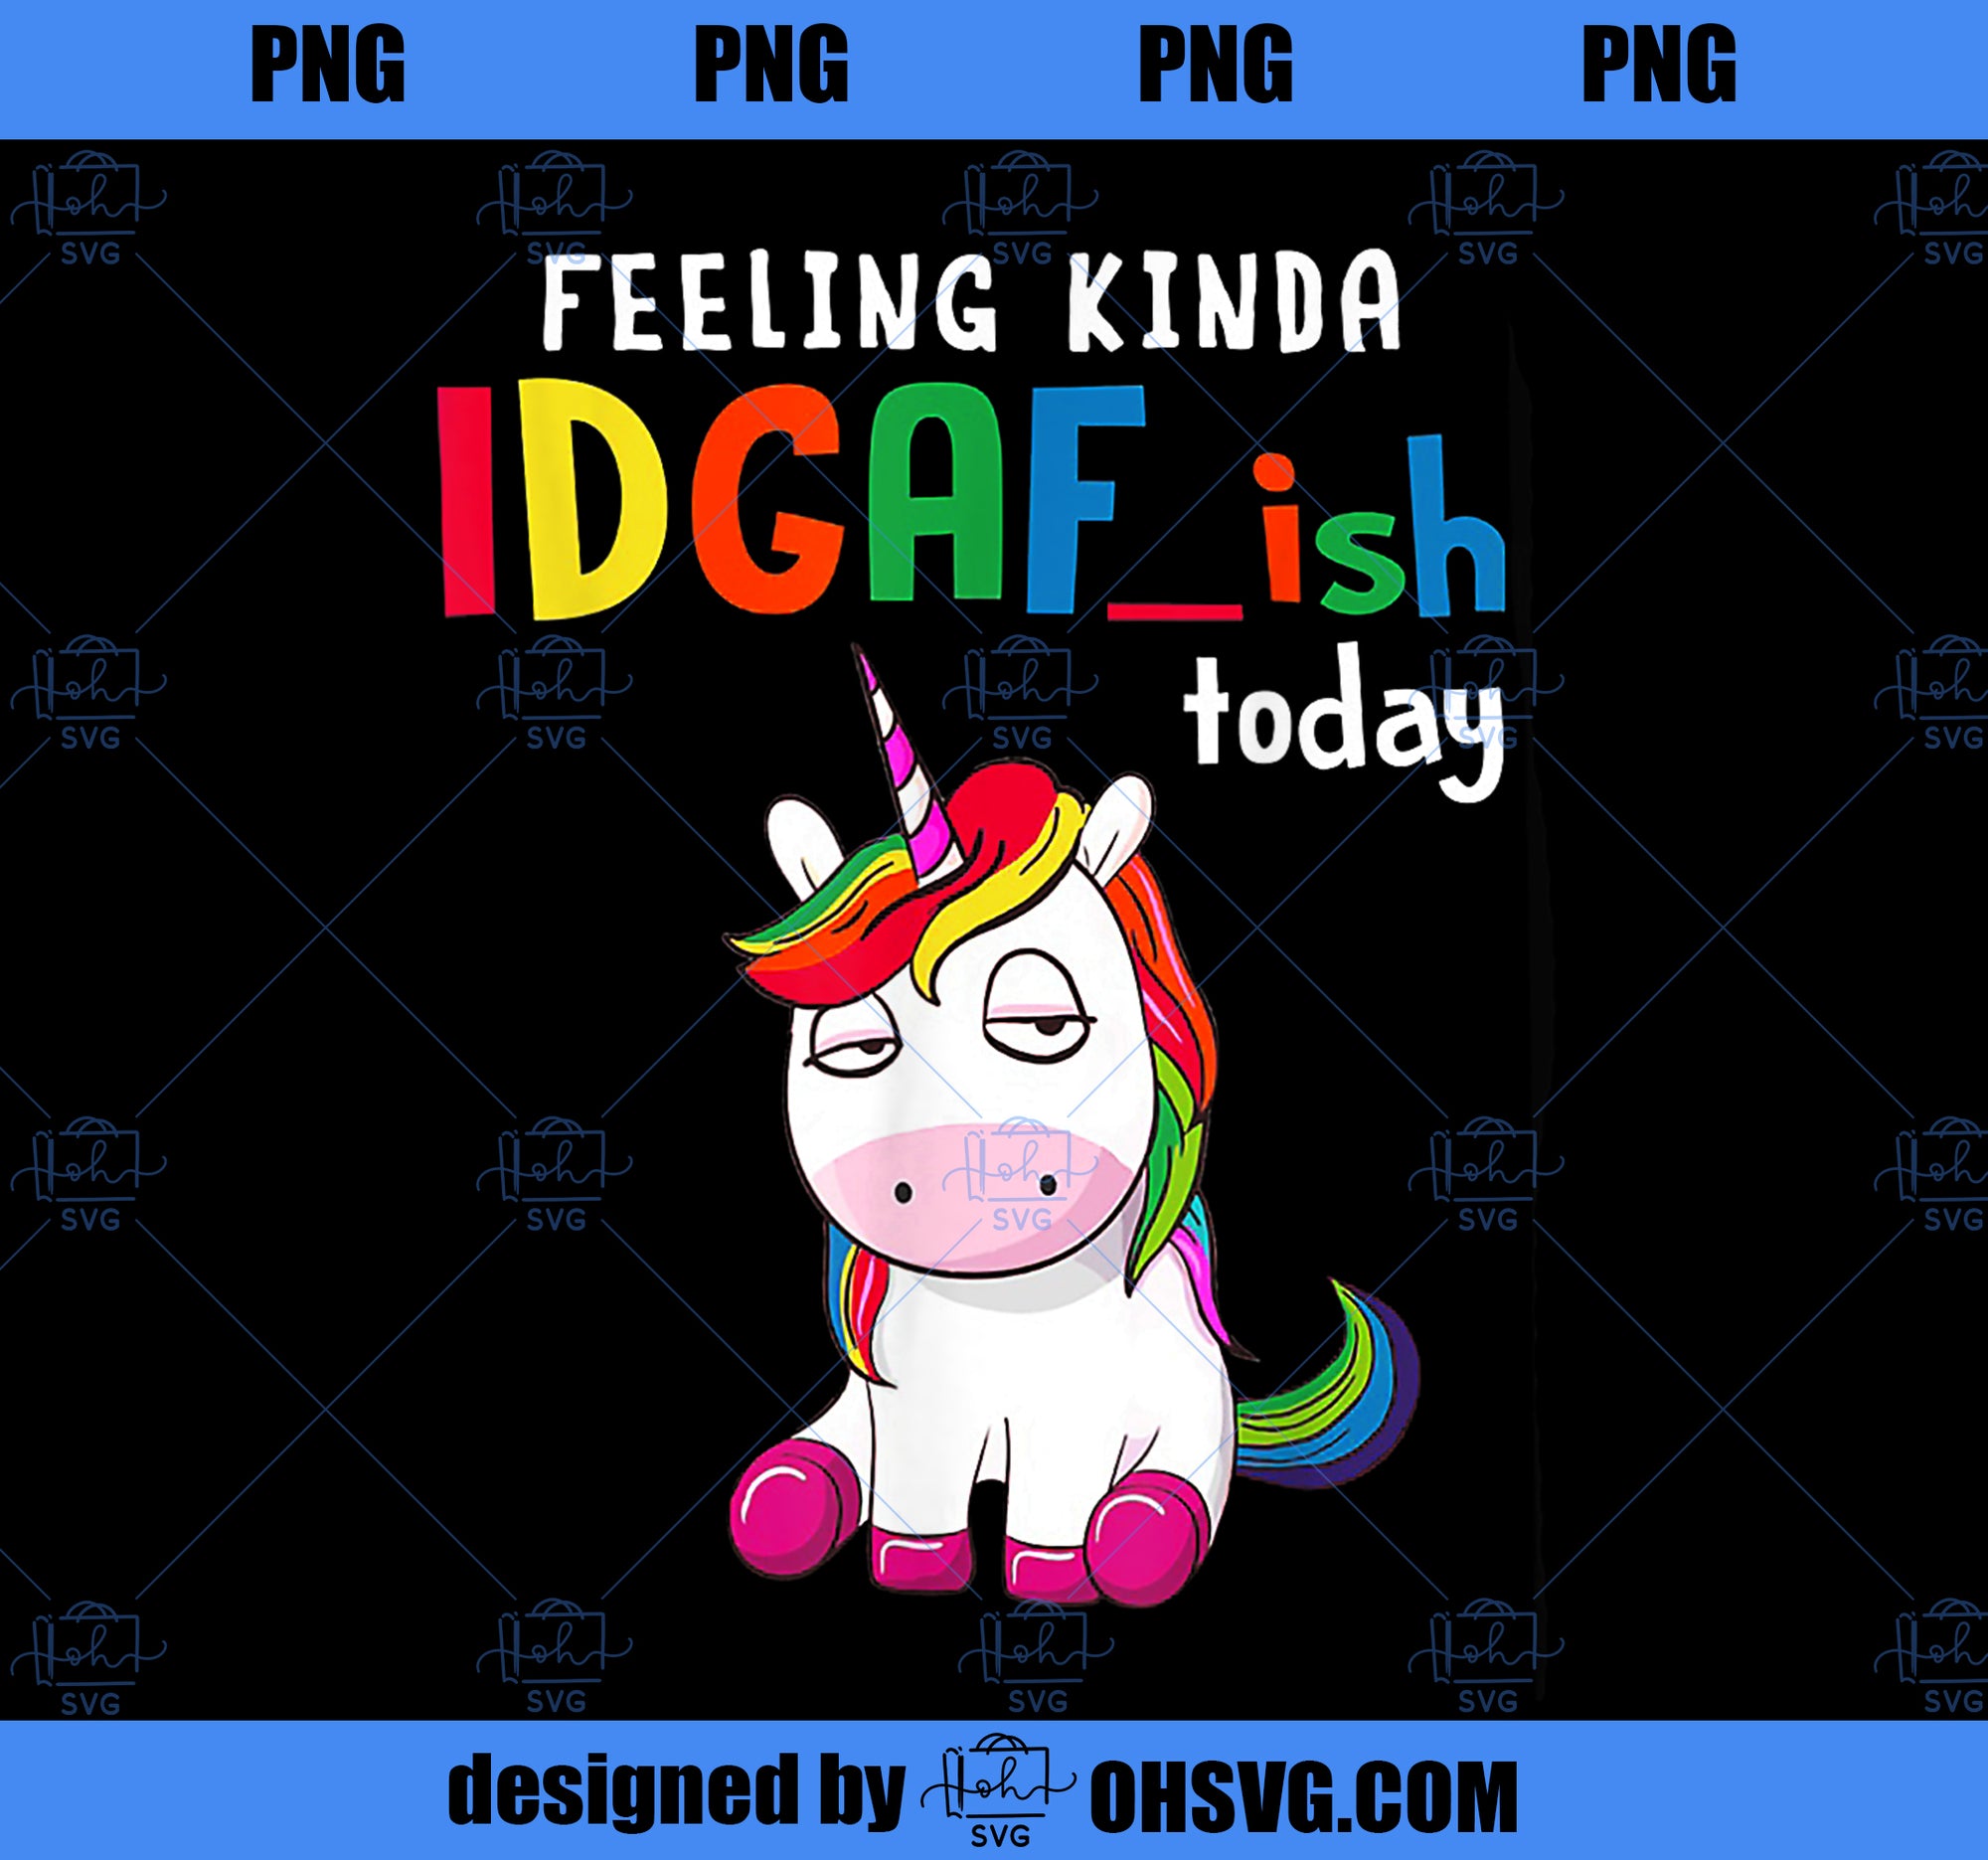 Feeling Kinda IDGAFish Today Funny Unicorn PNG, Magic Unicorn PNG, Unicorn PNG